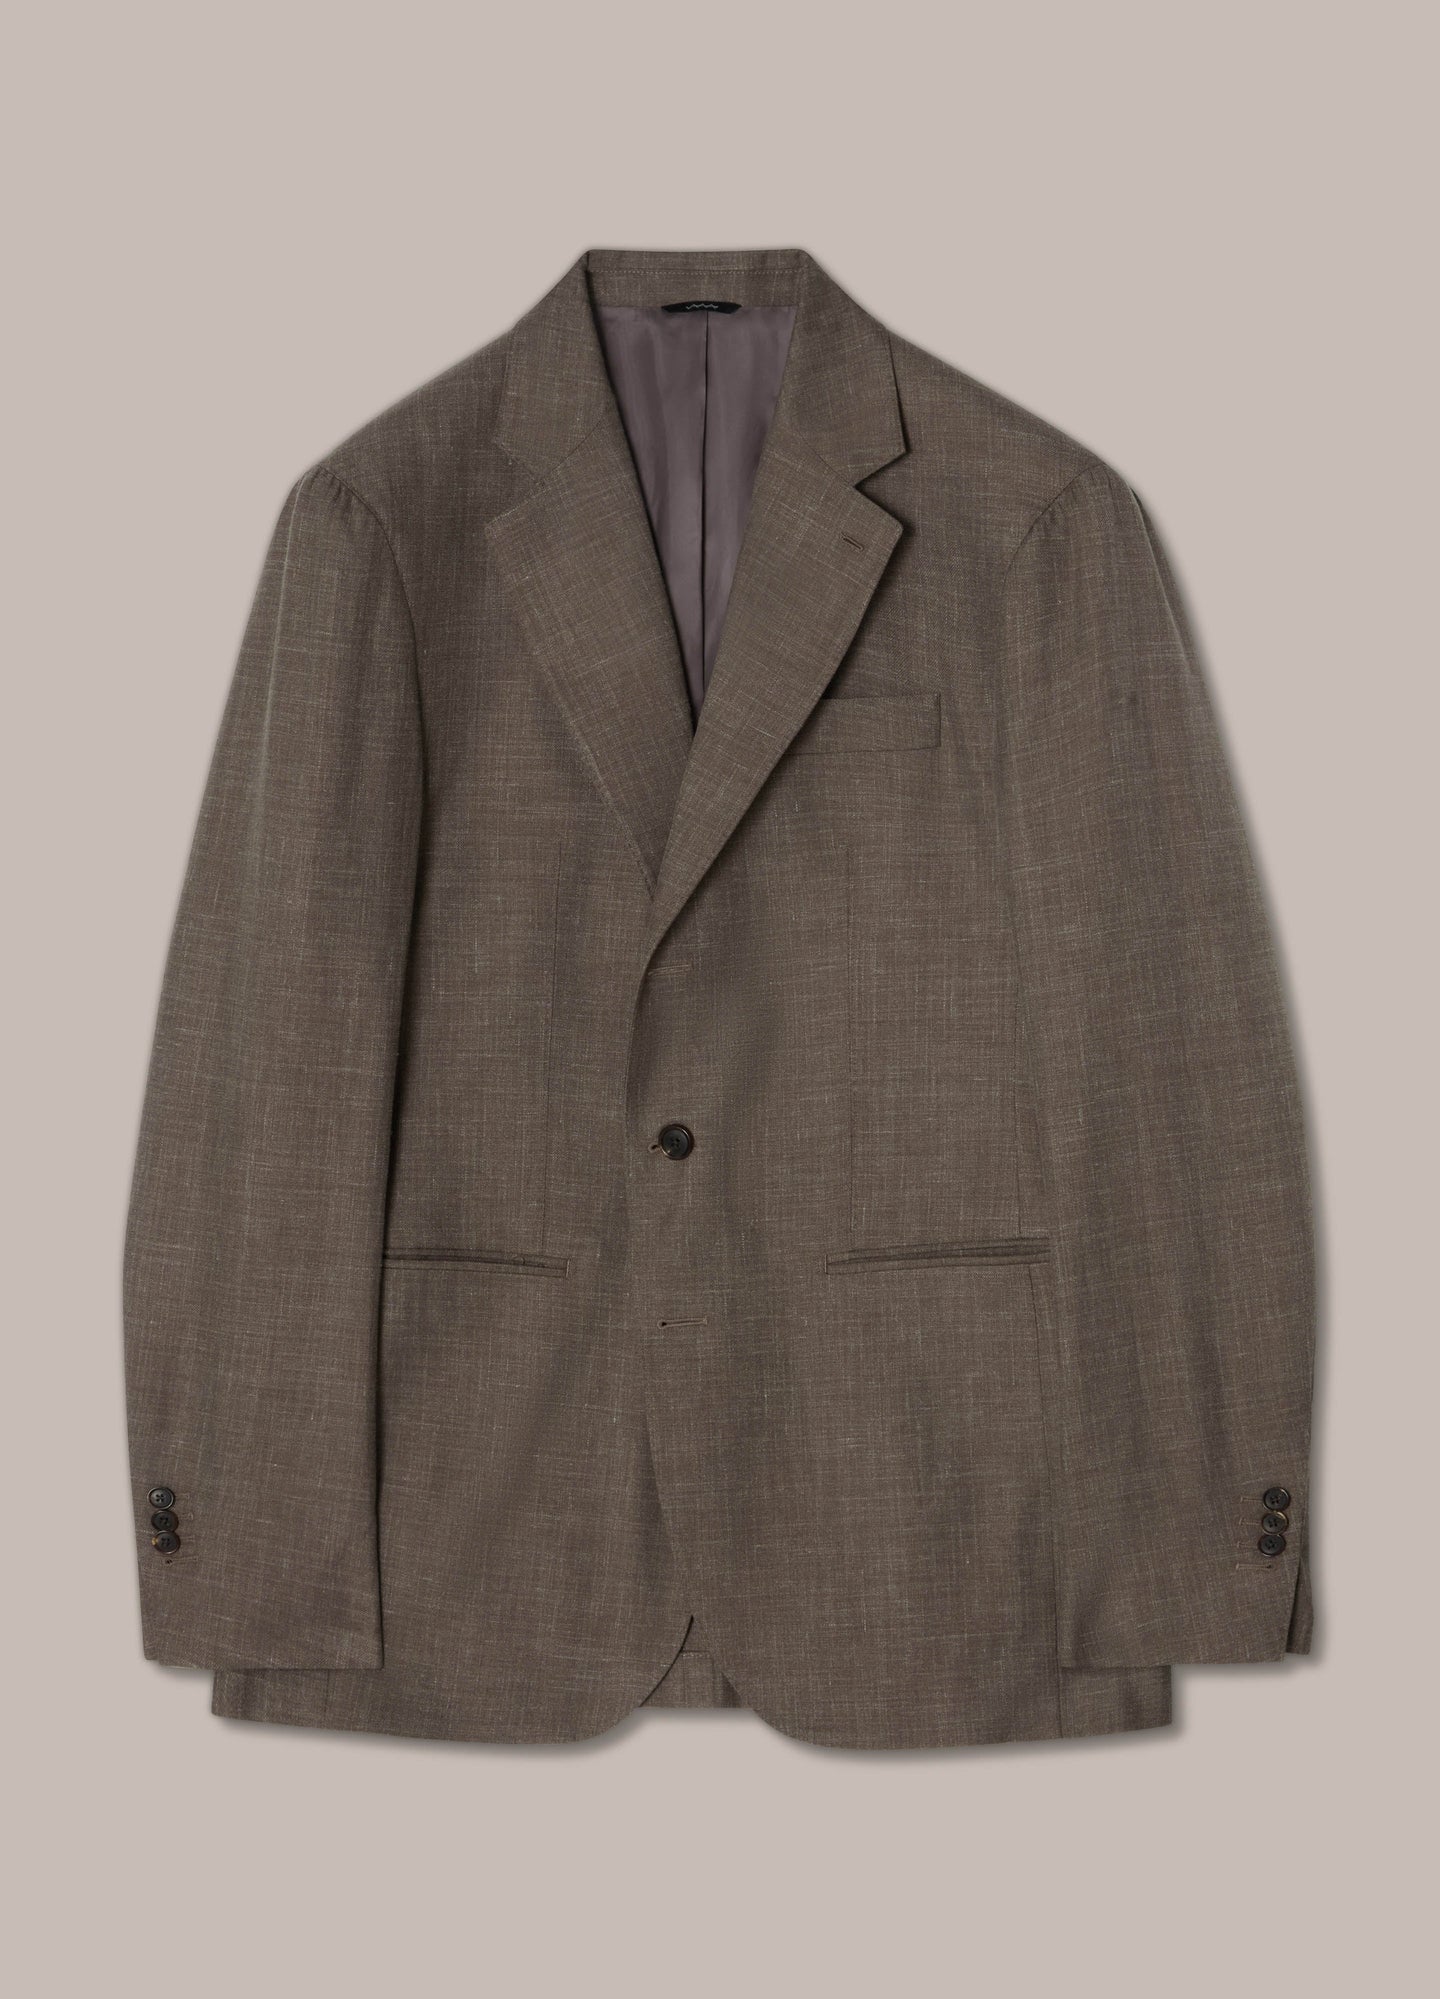 Don Wool/Silk/Linen Suit - Taupe Berg & Berg